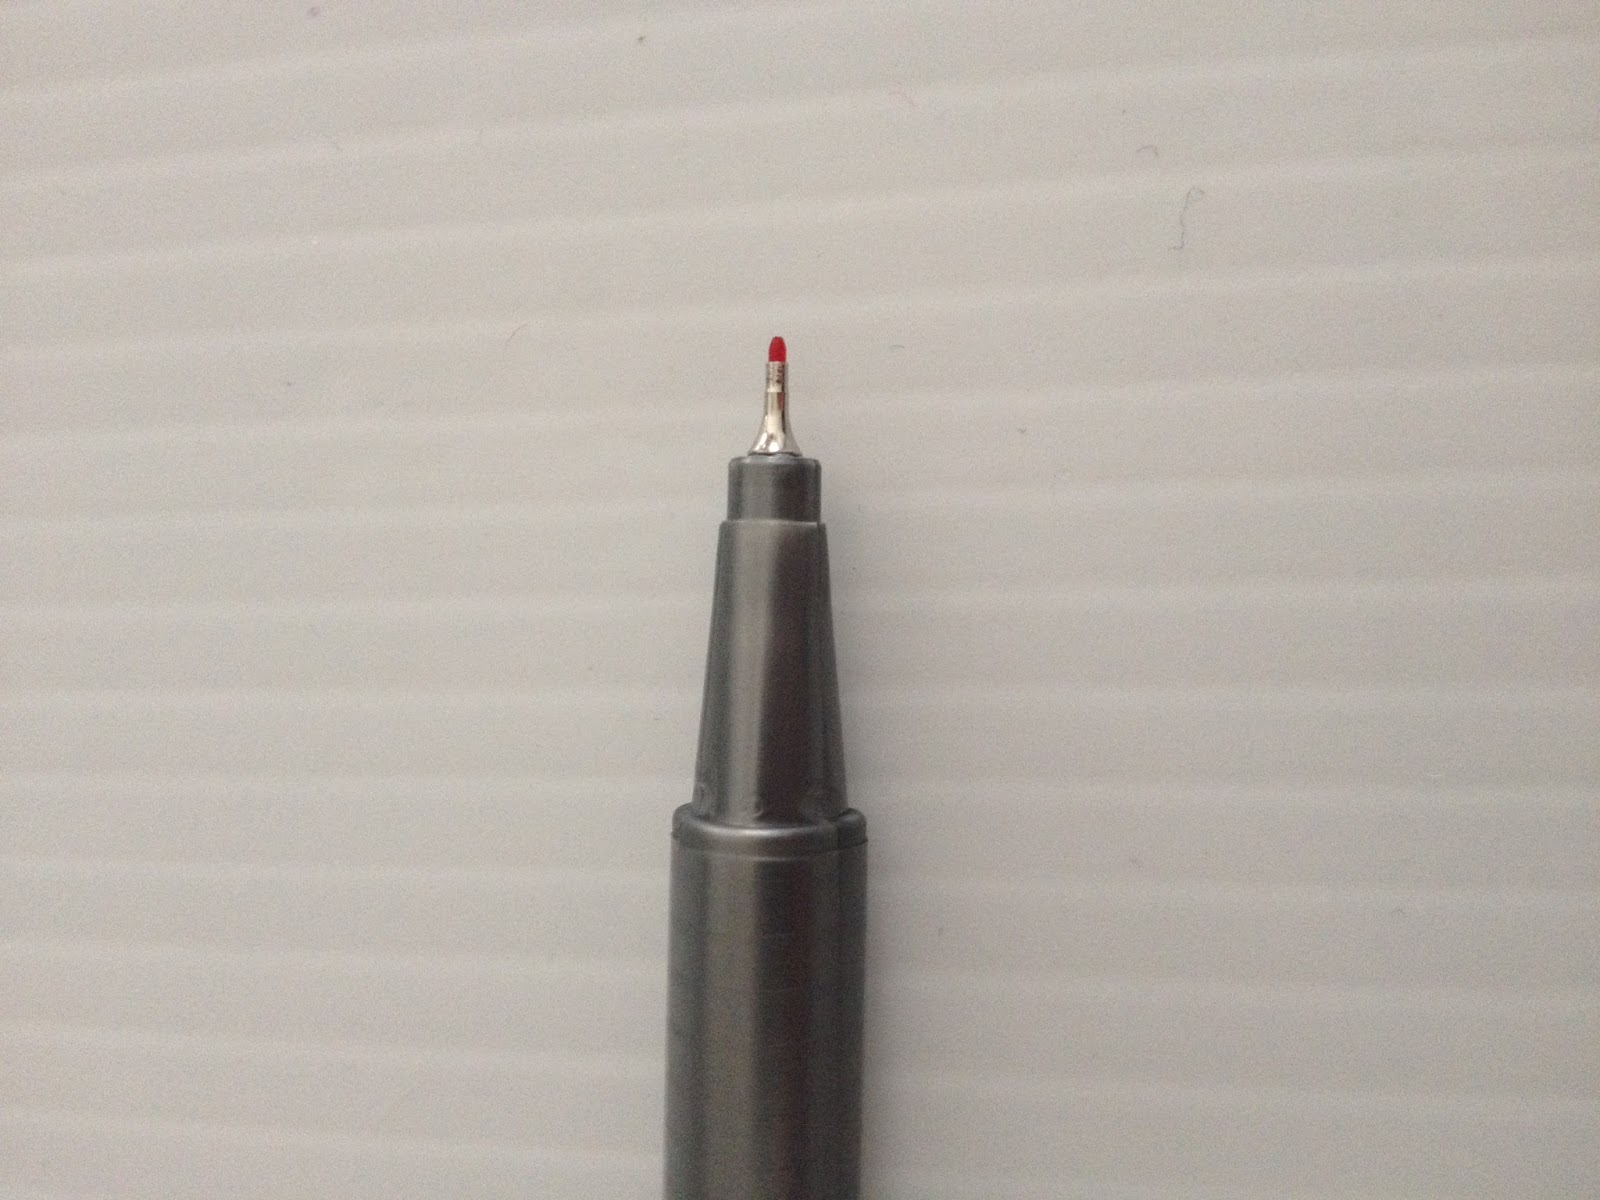 Staedtler Triplus Fineliner 0.3 mm Review — The Pen Addict